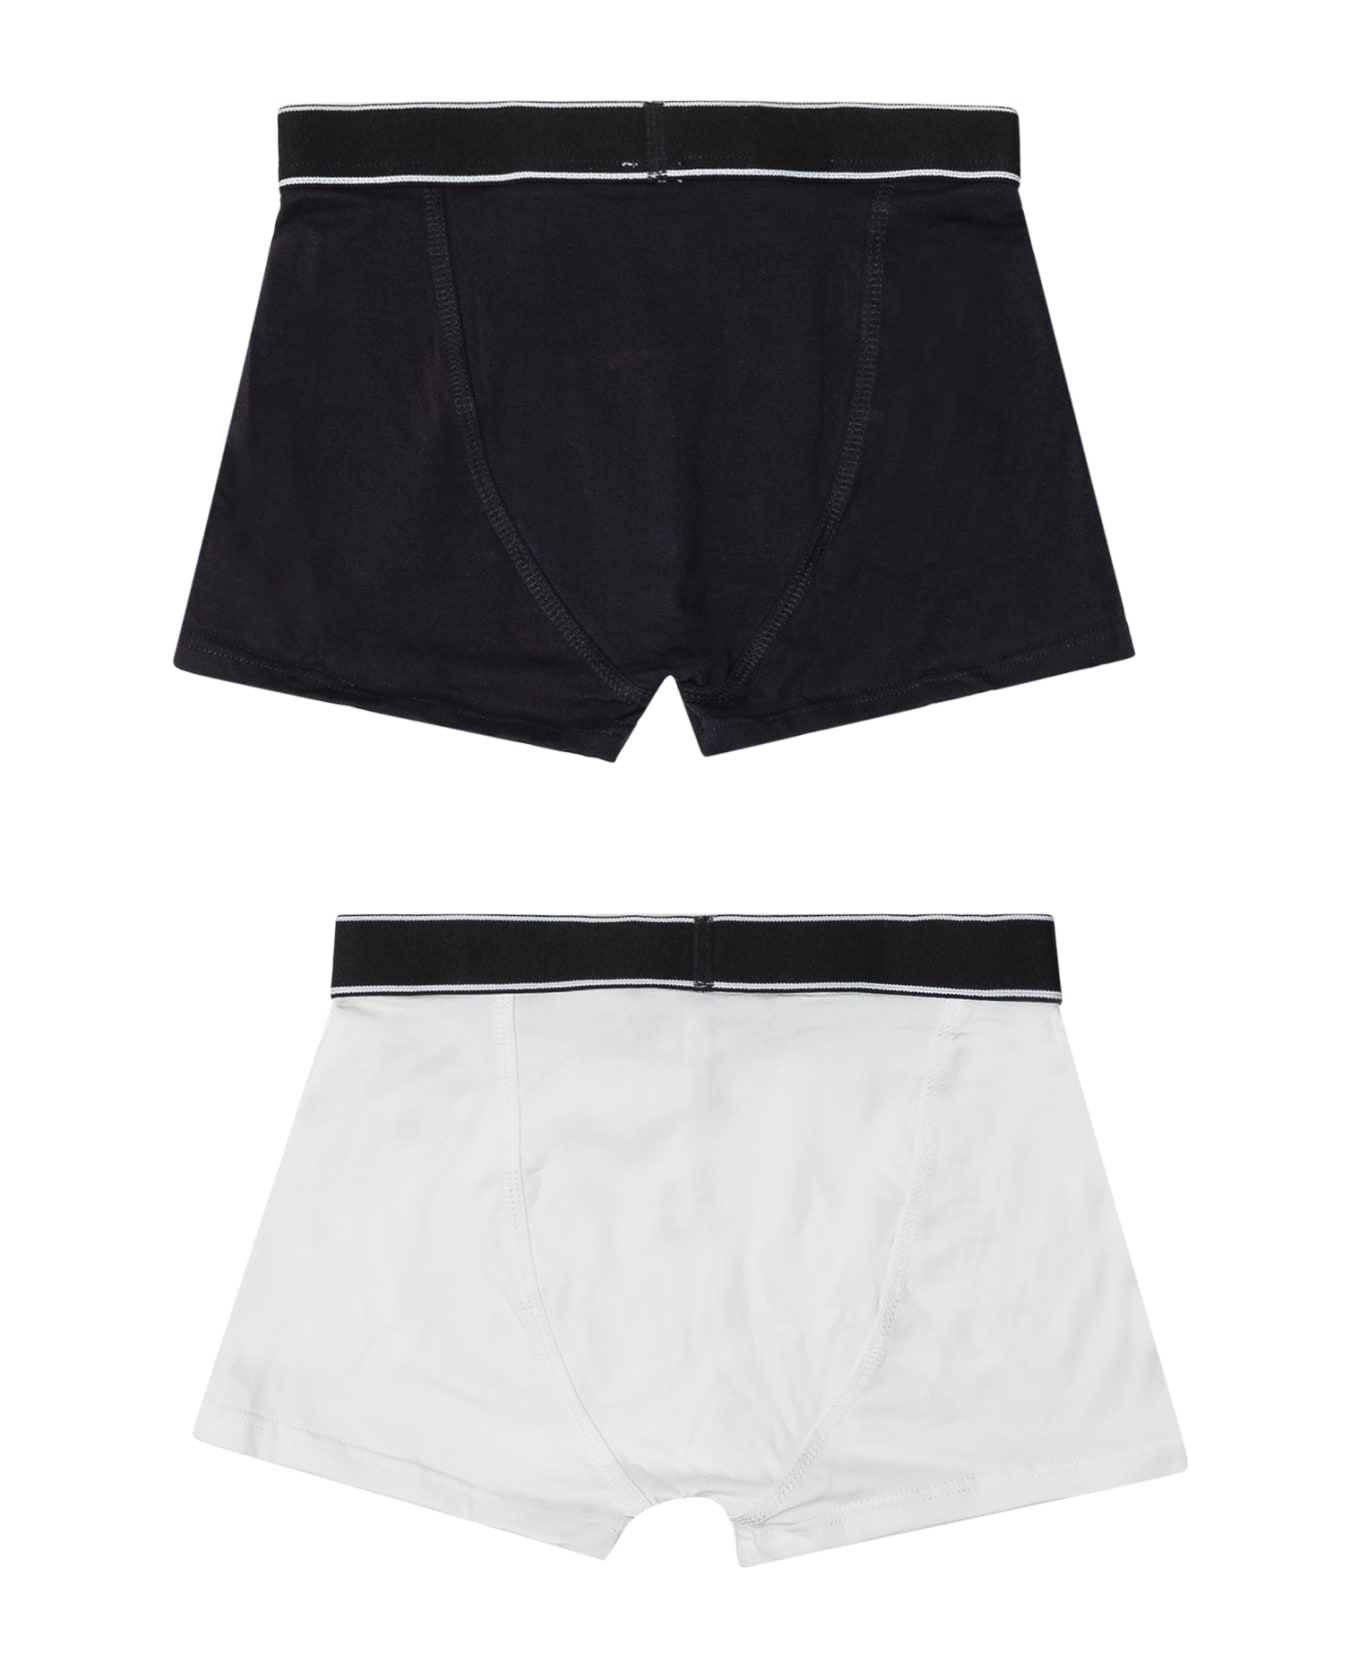 Hugo Boss Set Of 2 Boxer Shorts - NERO アンダーウェア